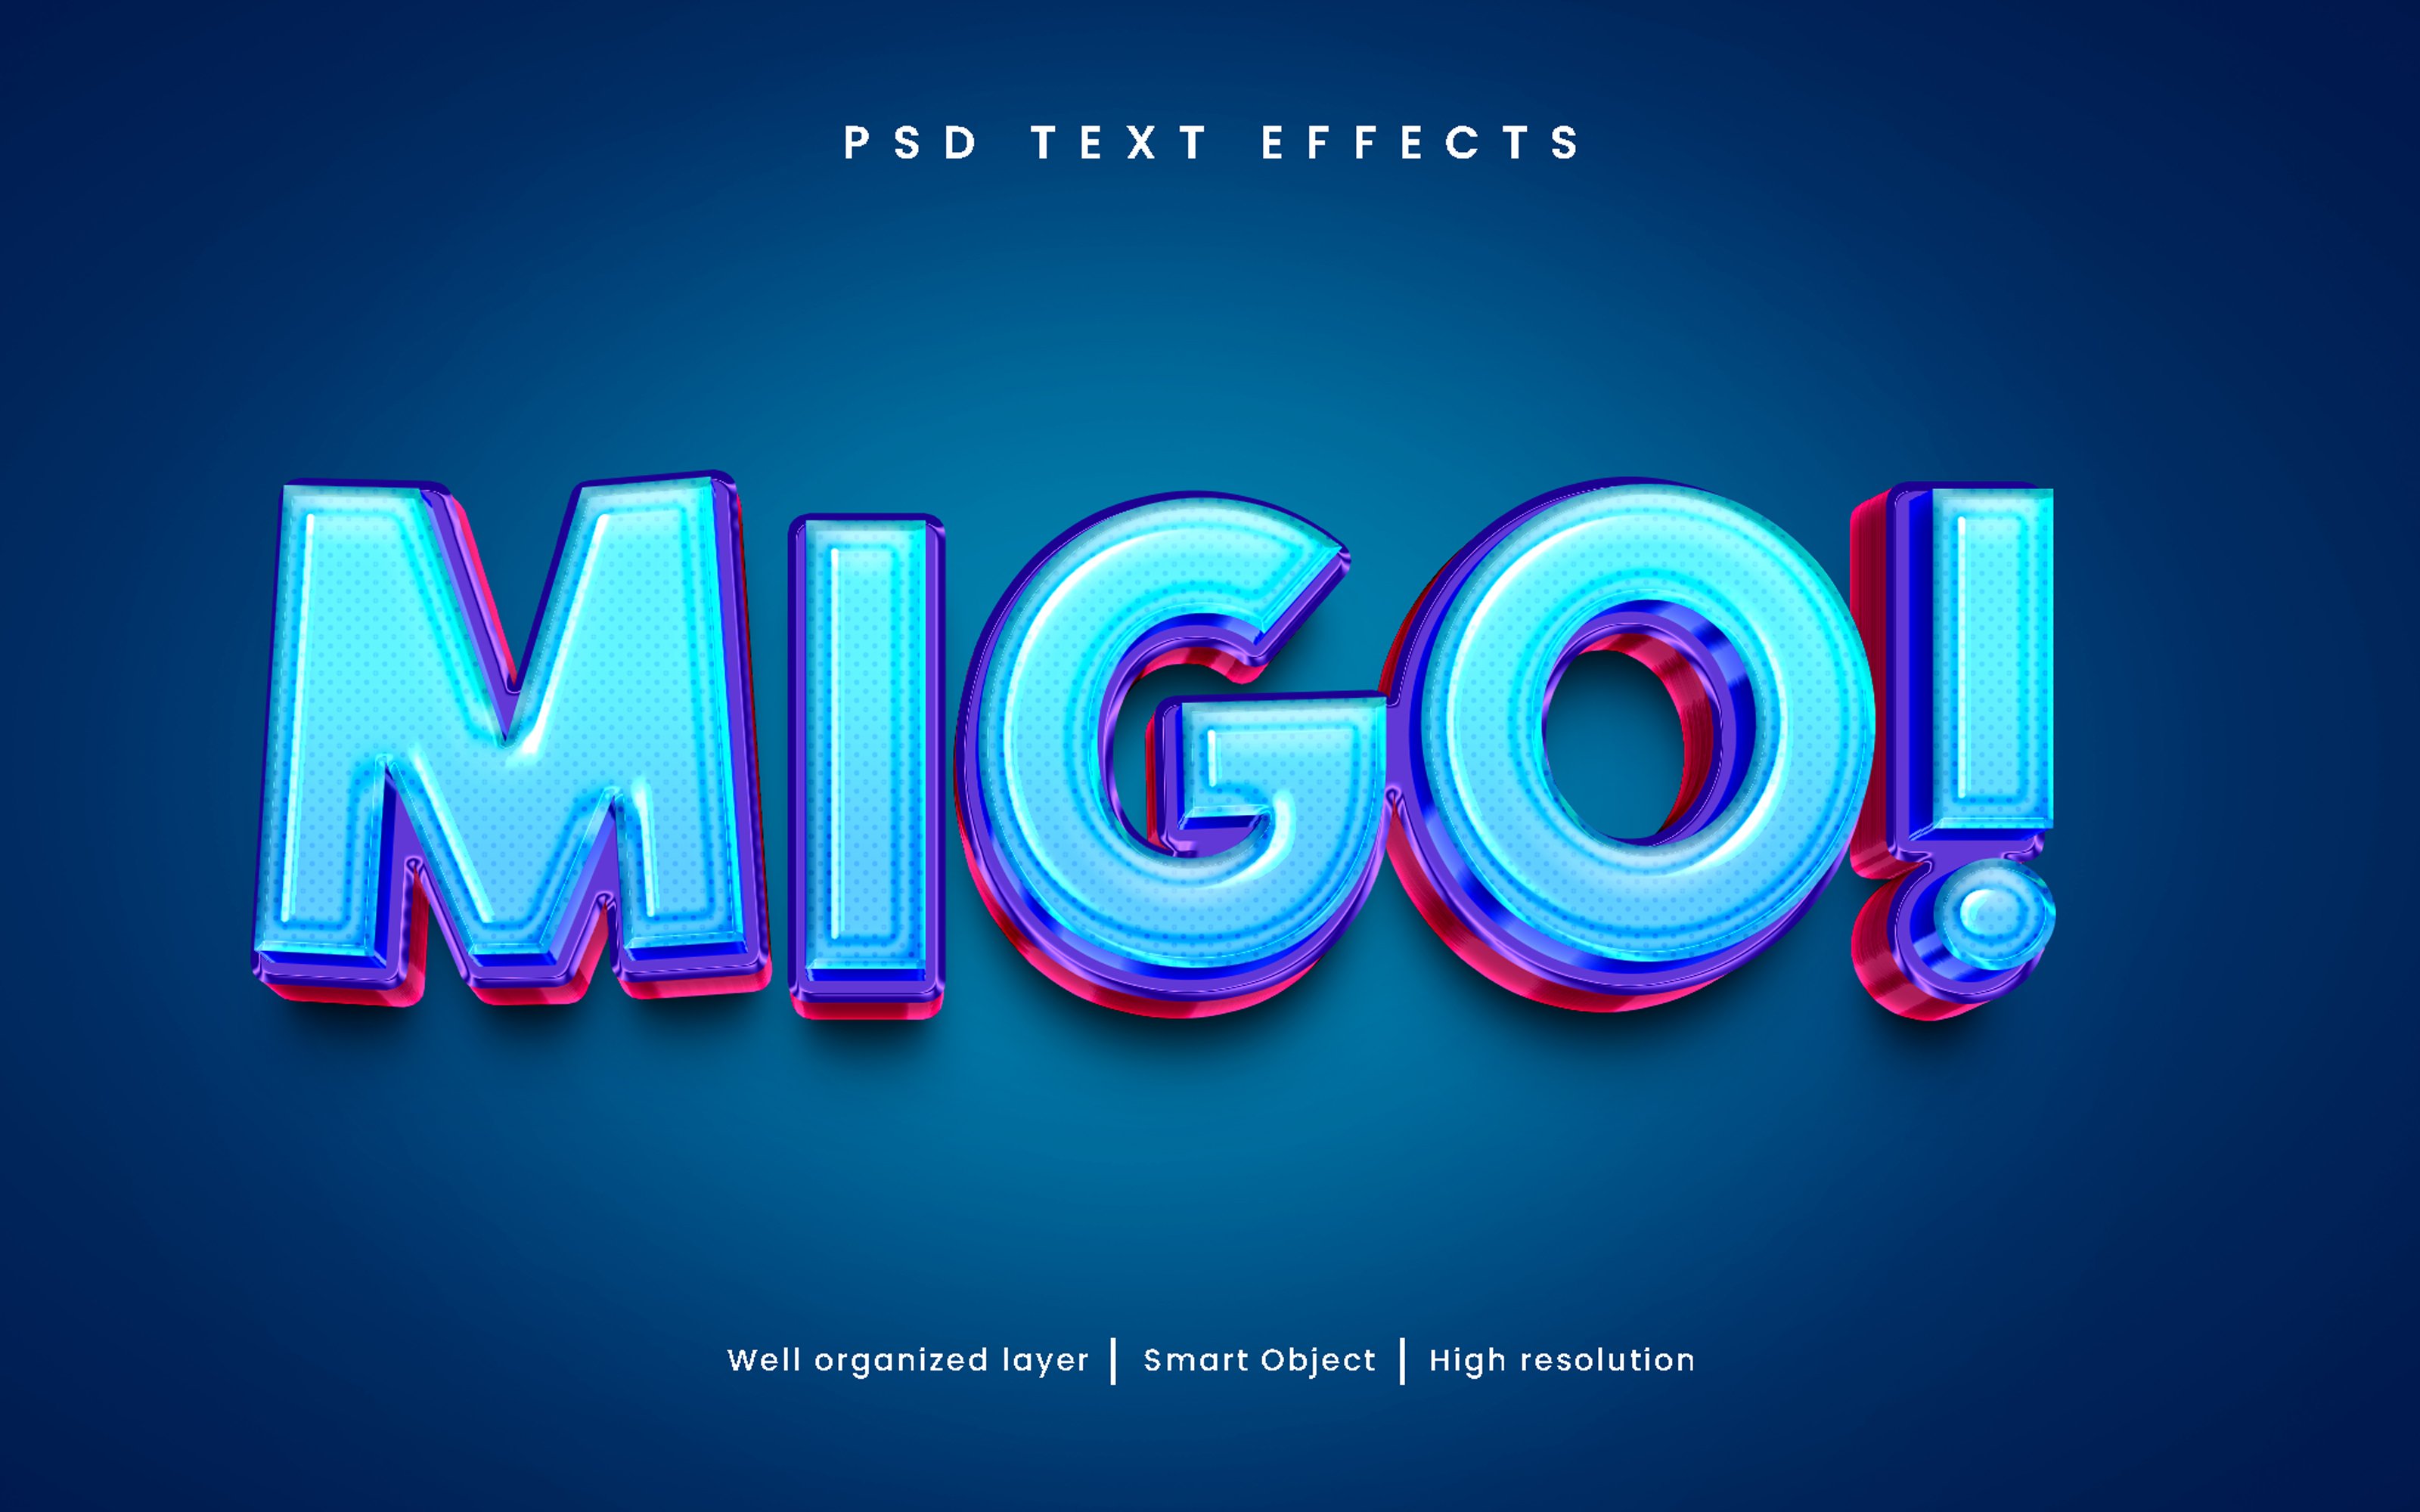 3D Style Migo editable text effectcover image.